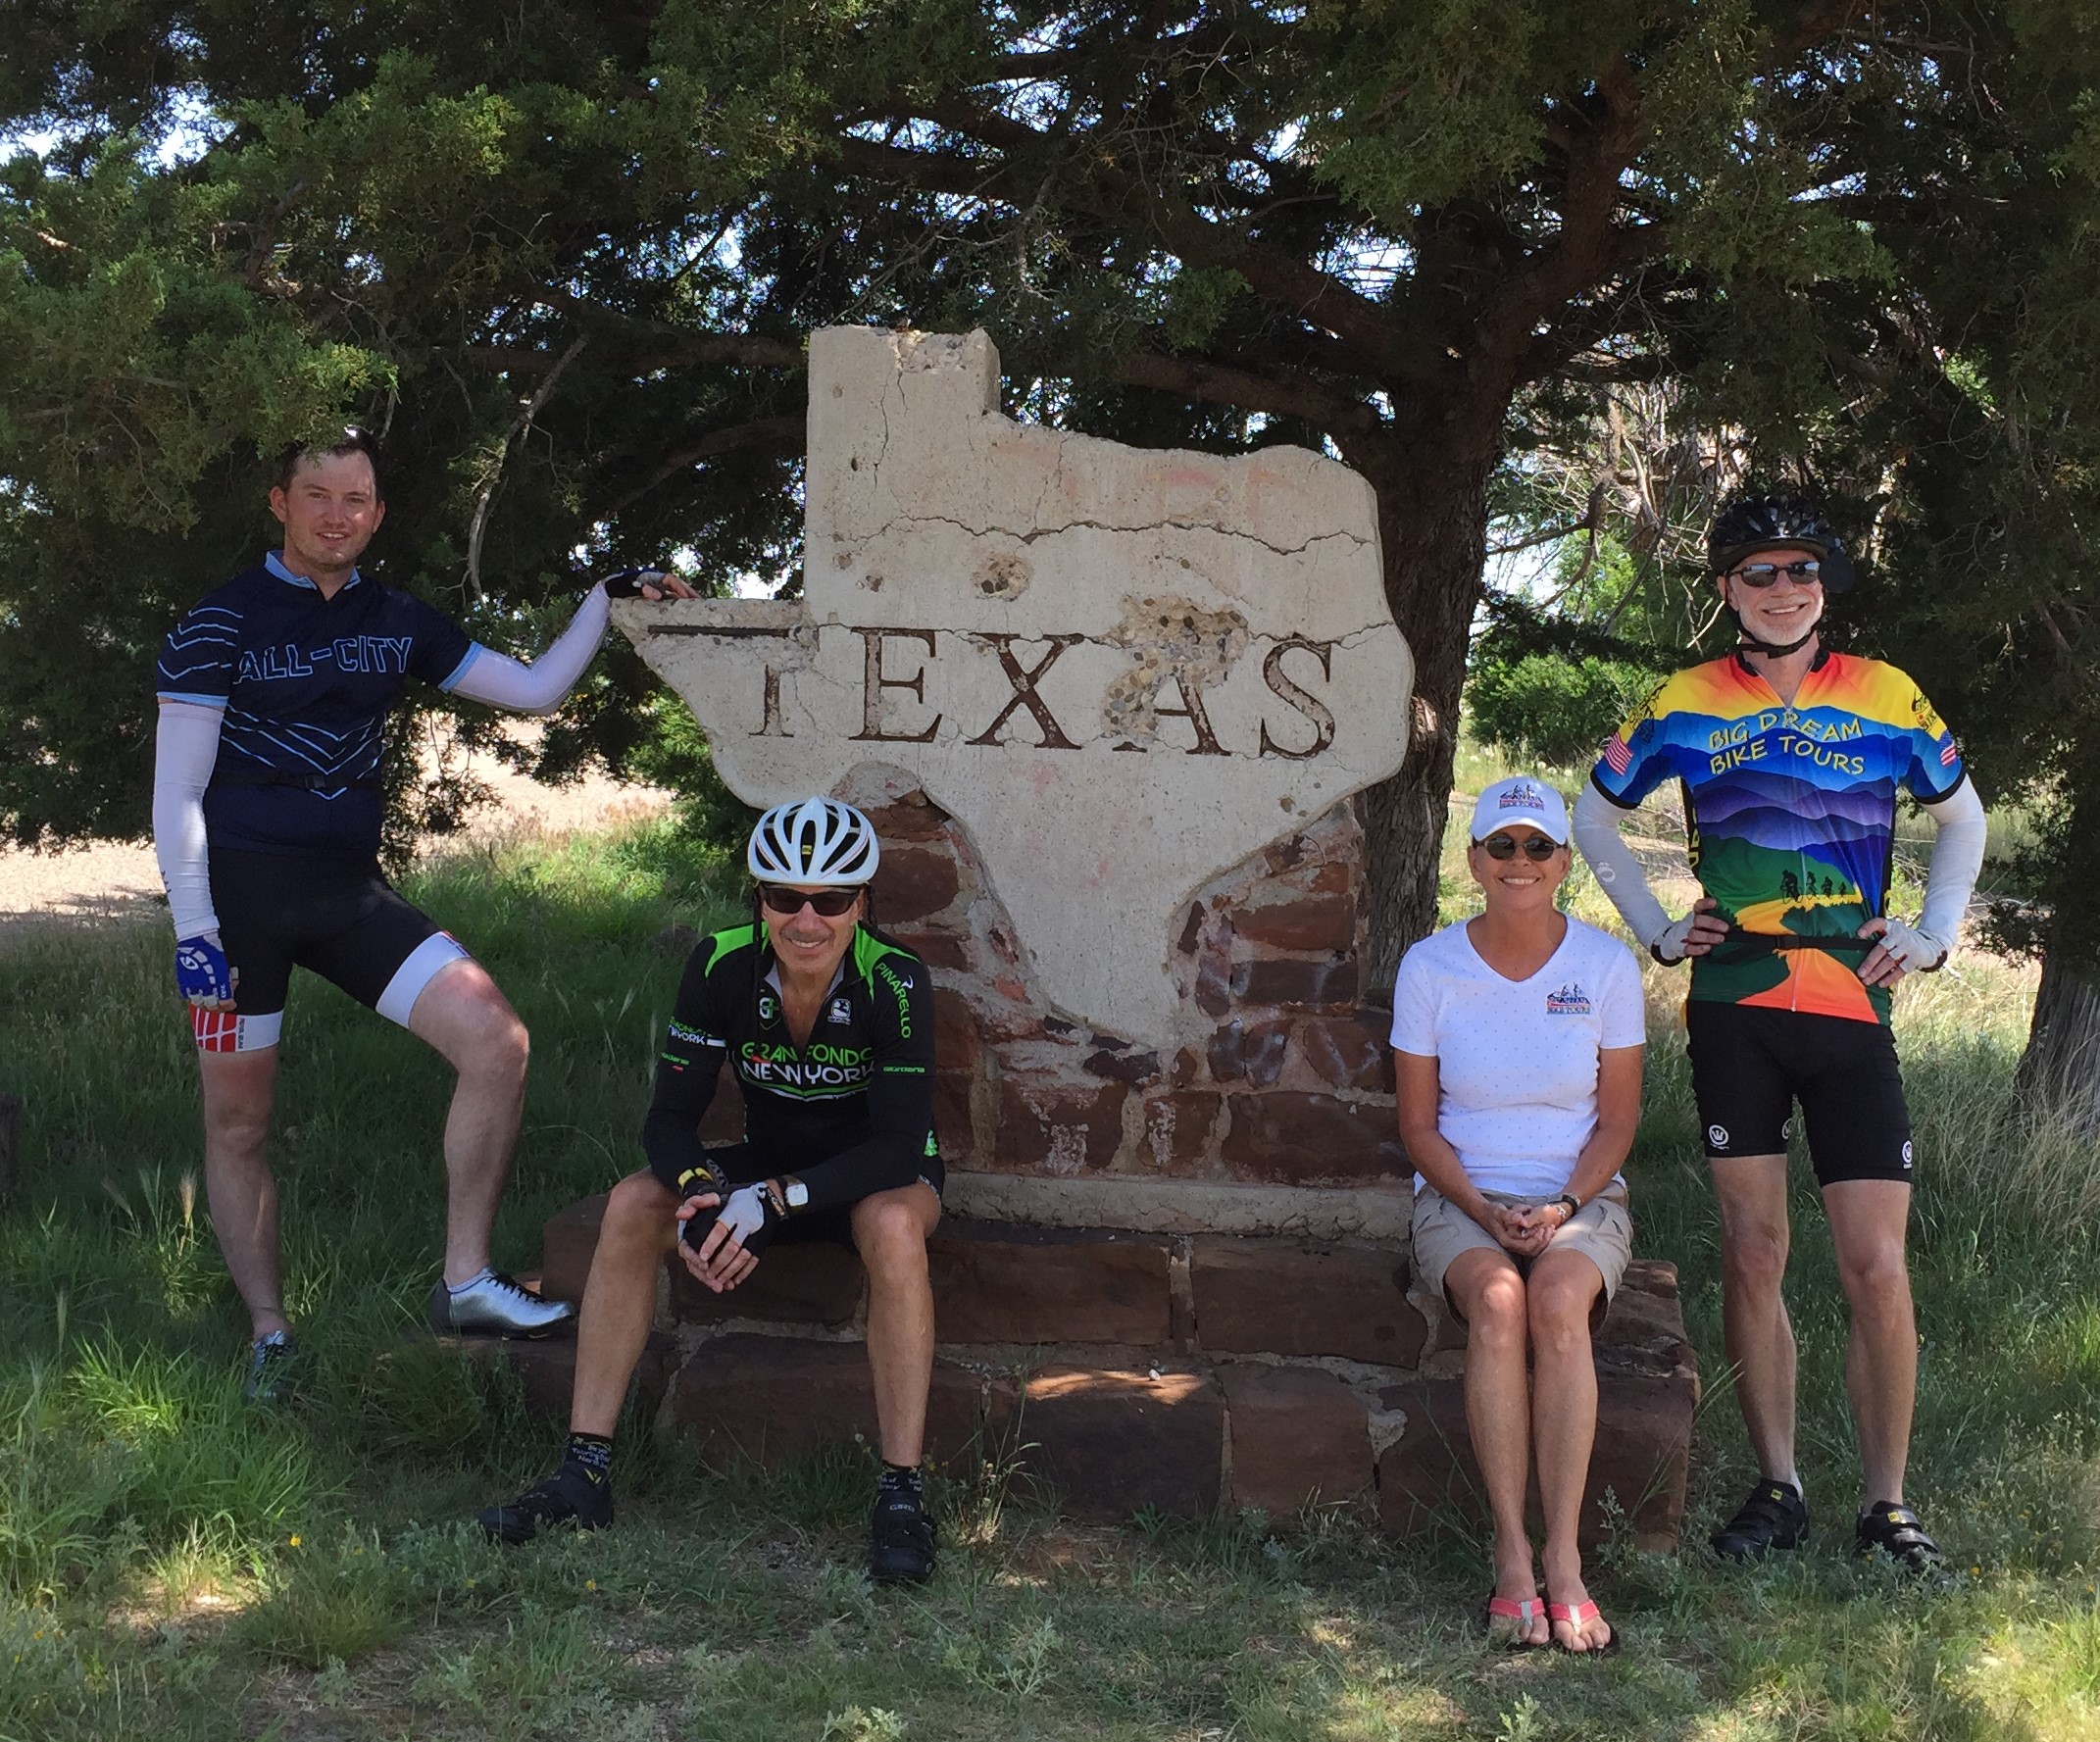 Day 18 – Cross Country Bike Tour – Tucumcari, NM to Dalhart, TX